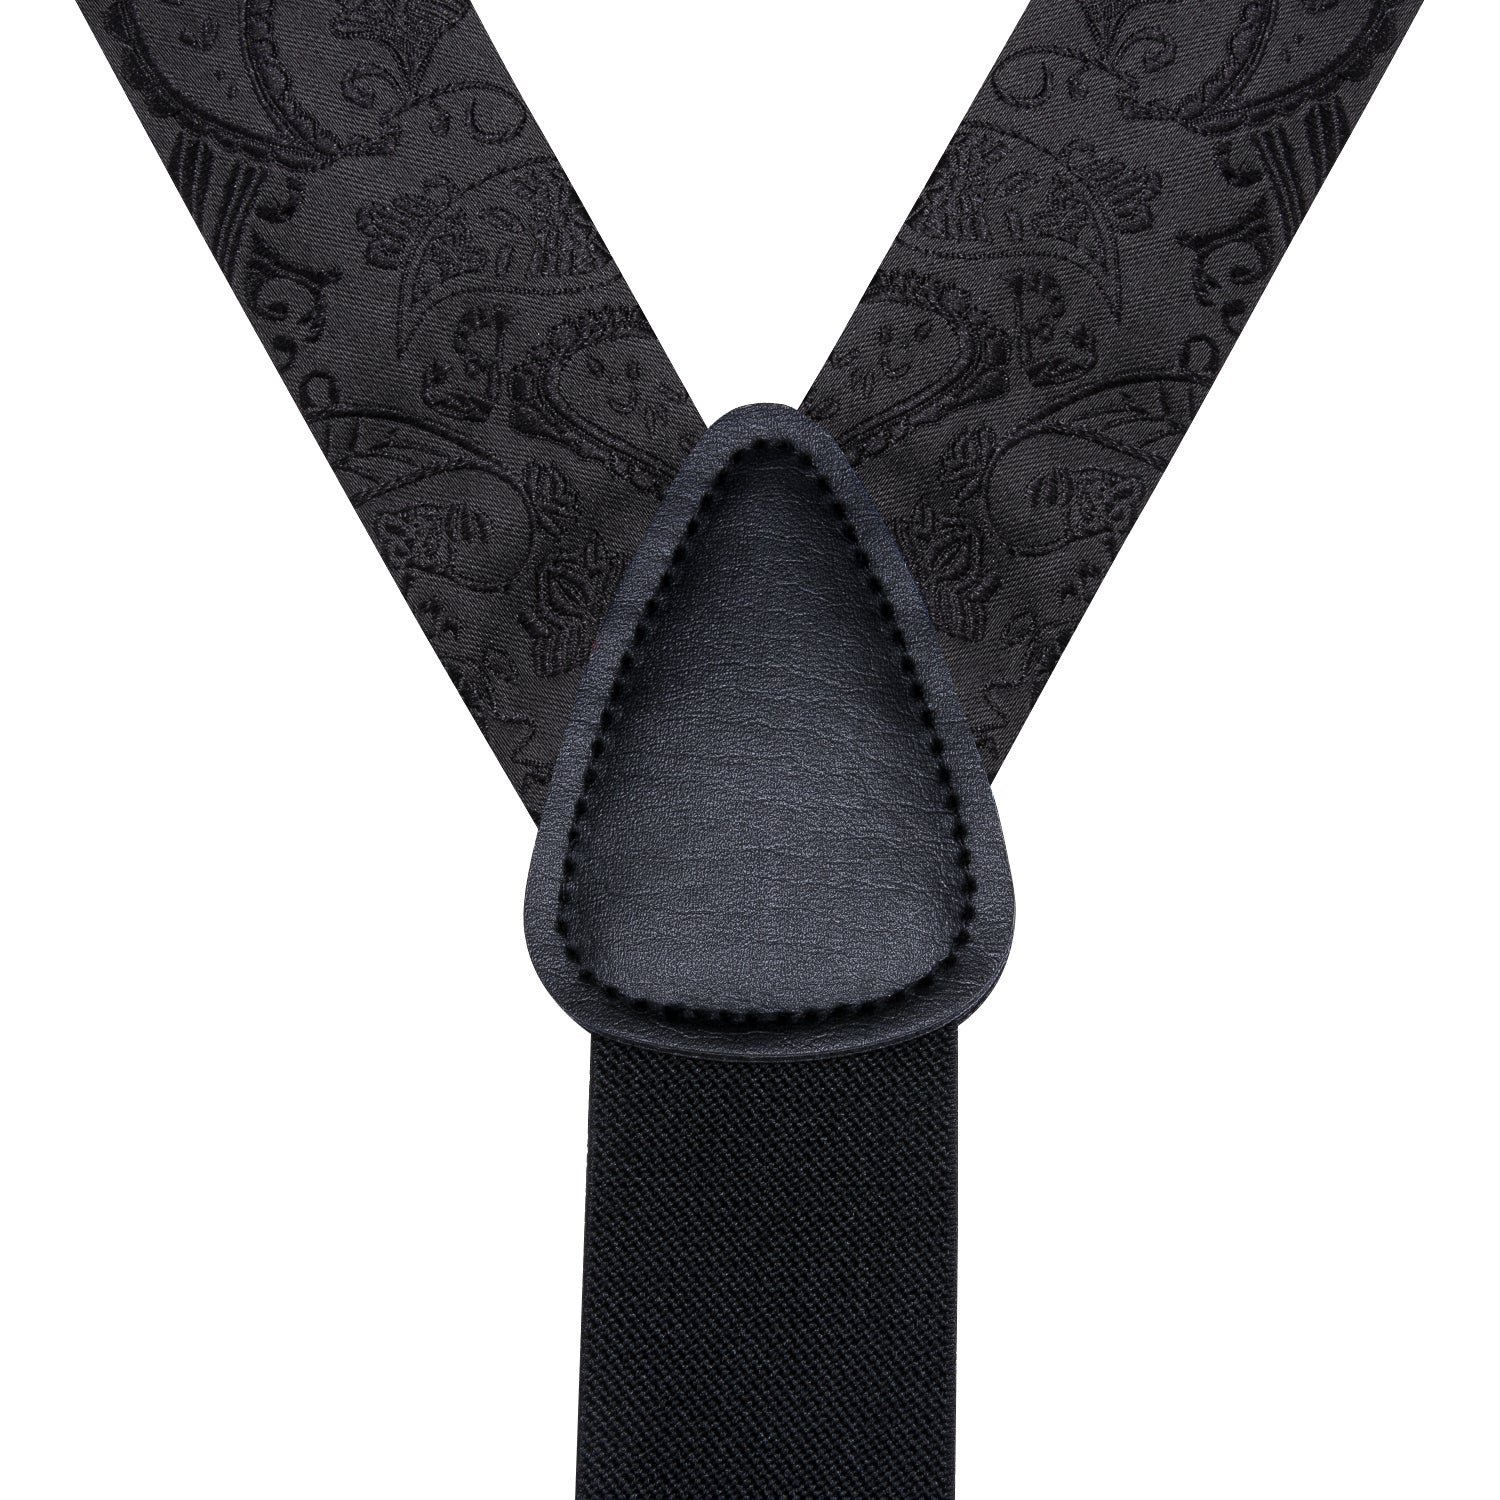 Black Paisley Suspender Bowtie Hanky Cufflinks Set